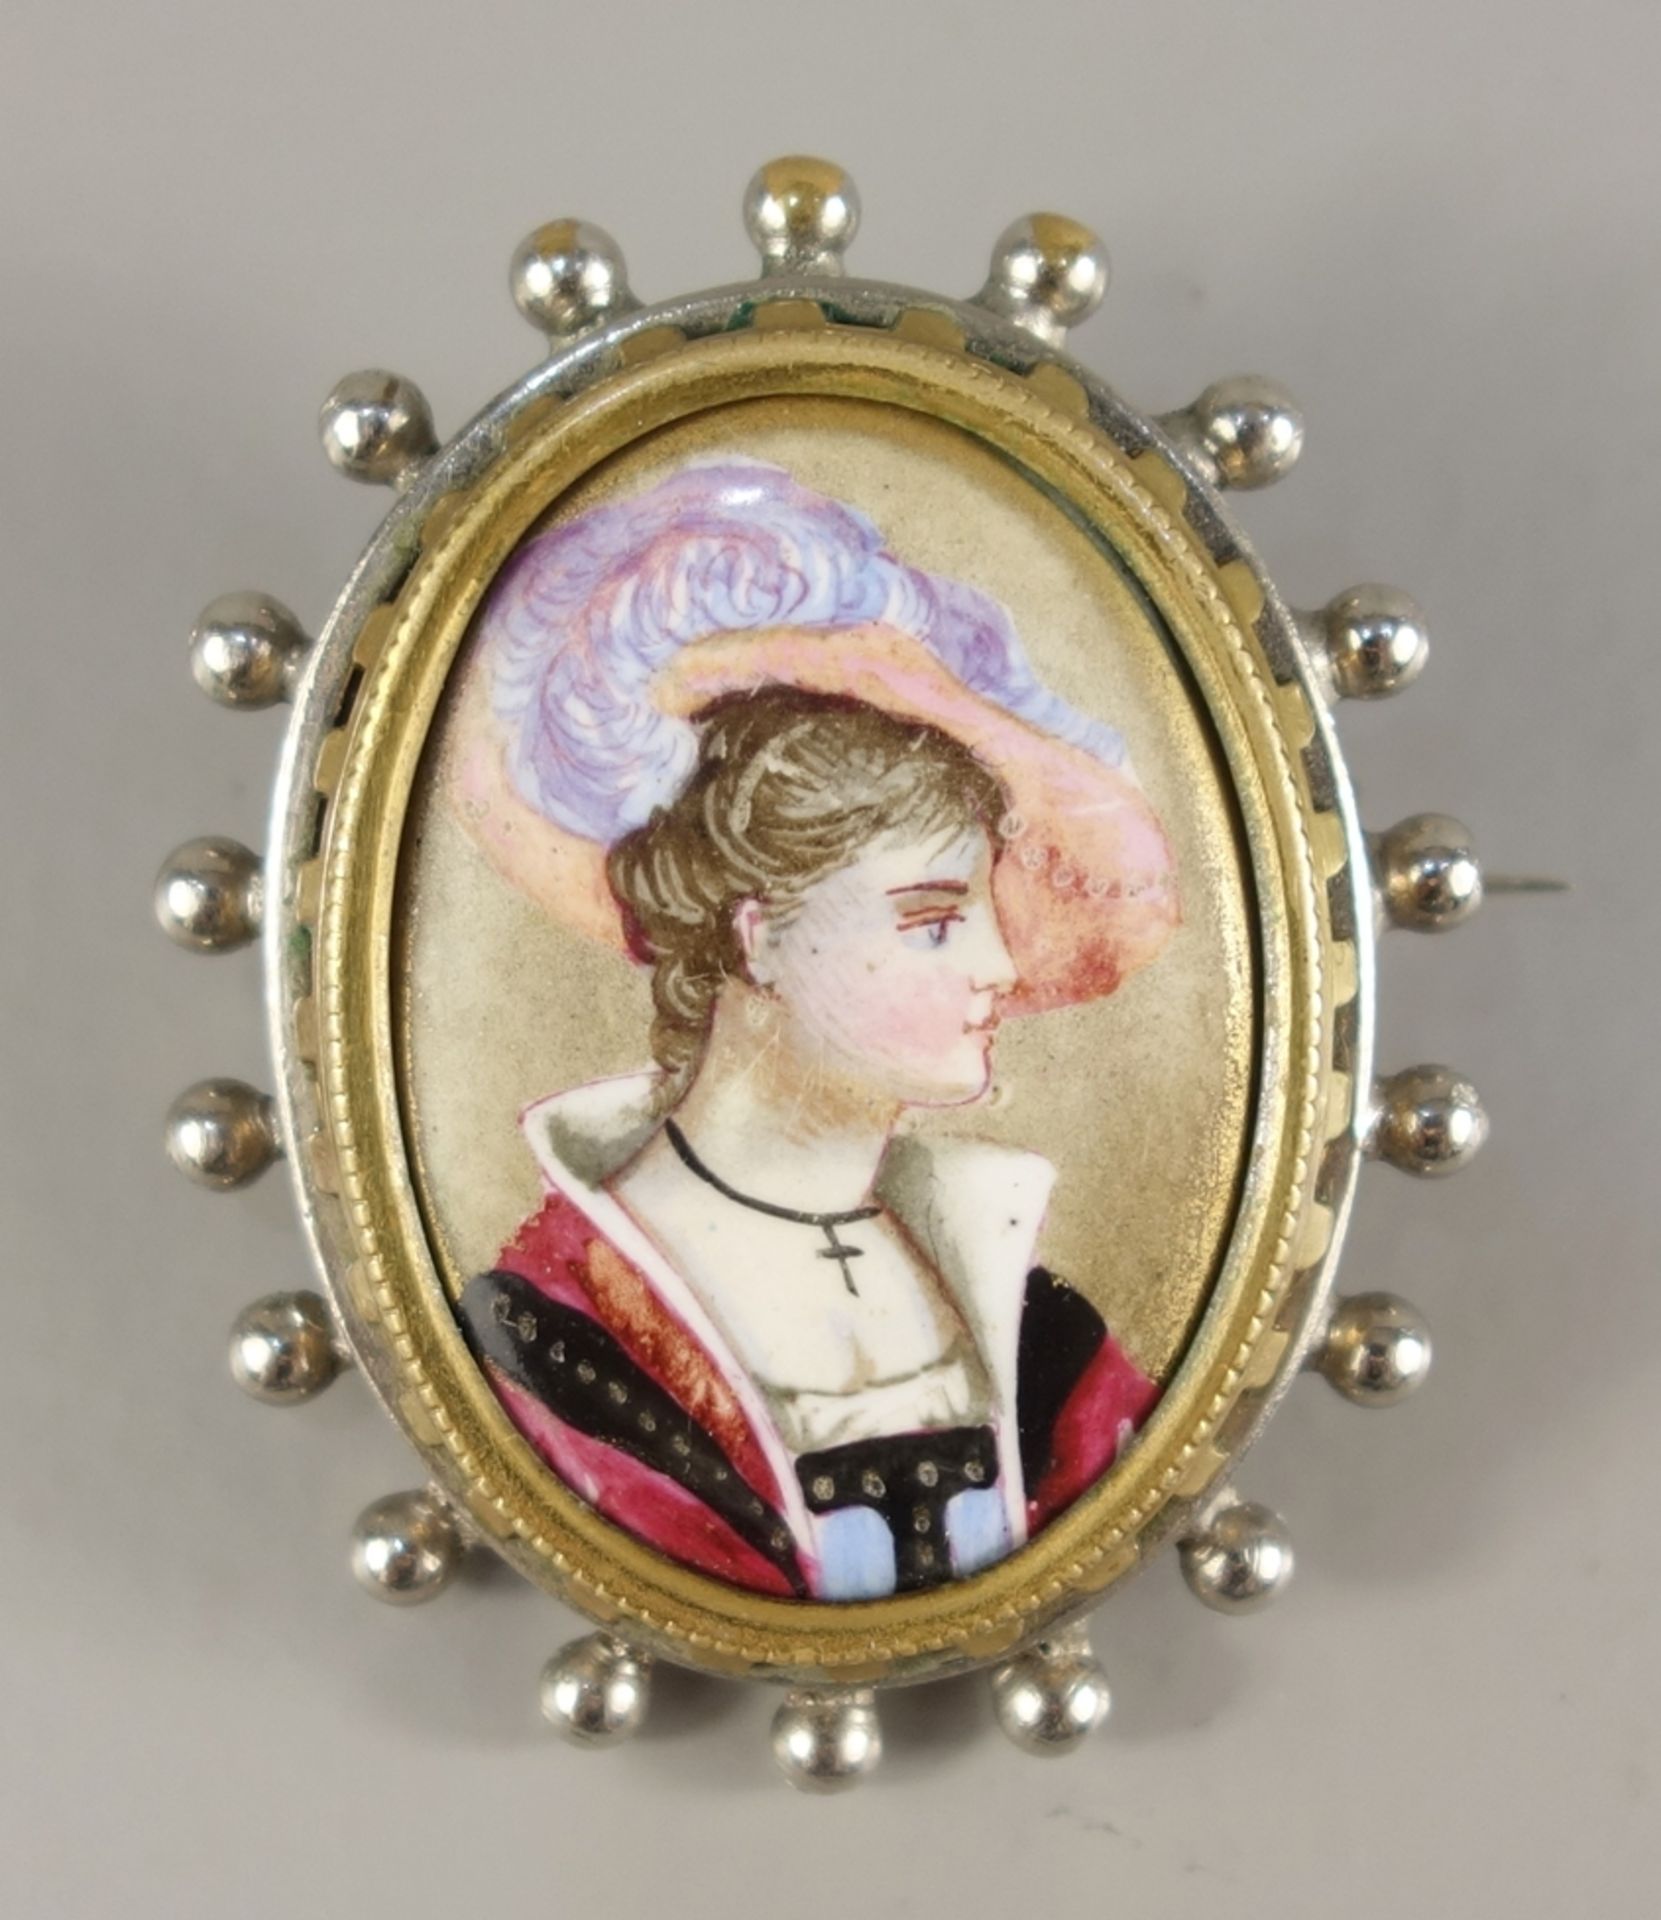 Brosche mit Frauenporträt, Handmalerei, um 1890, Messing, versilbert, ovales Porträt in